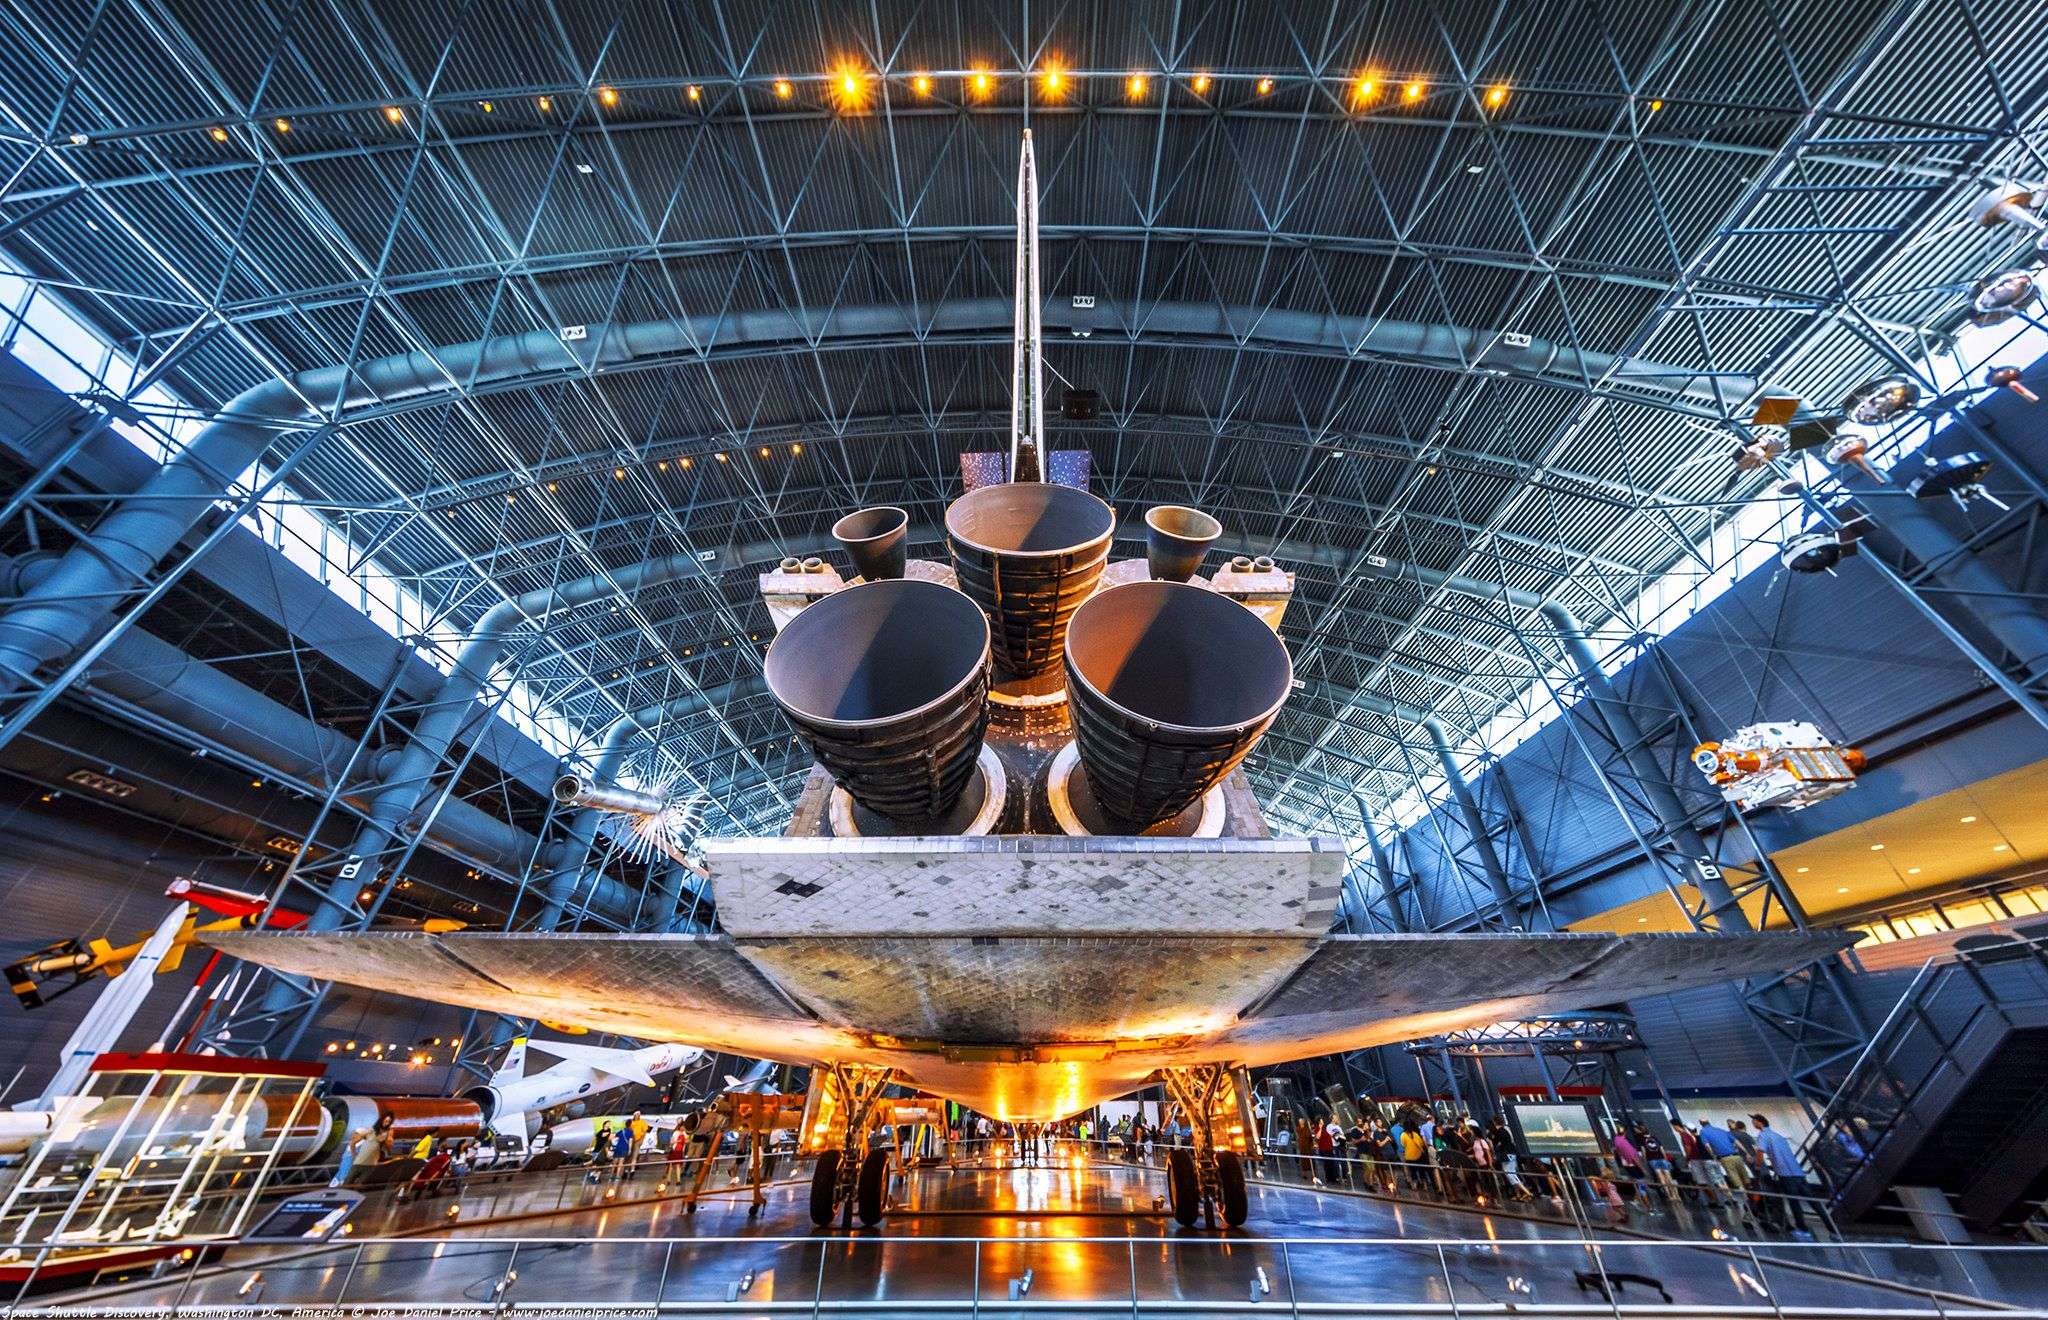 Space Shuttle Discovery, Steven F. Udvar